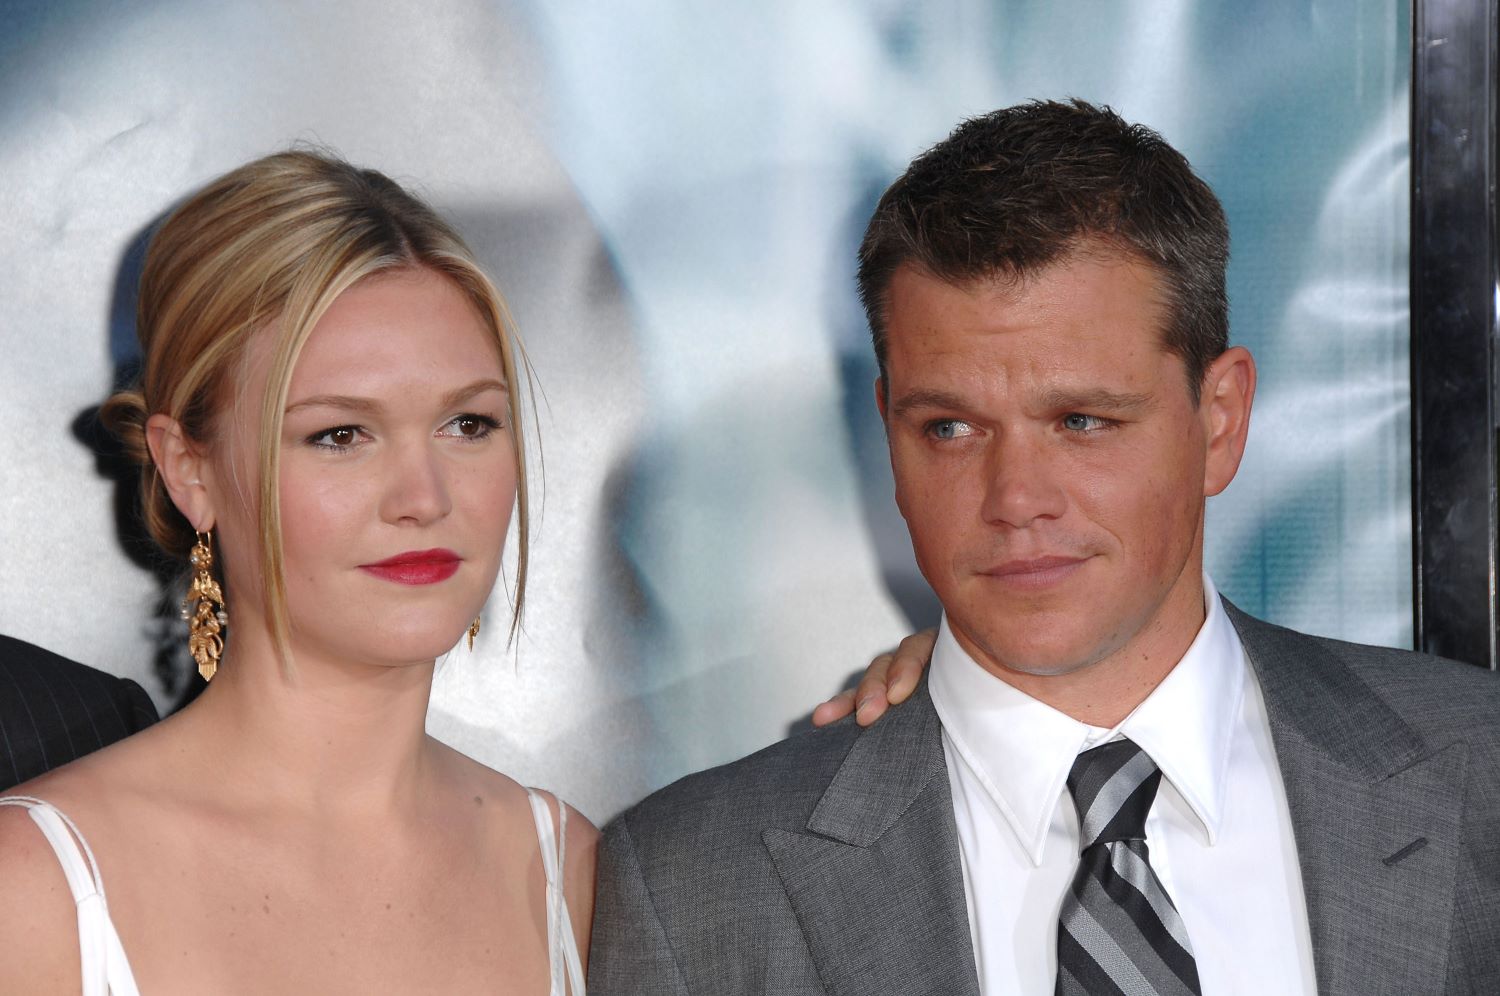 'The Bourne Identity' stars Julia Stiles and Matt Damon